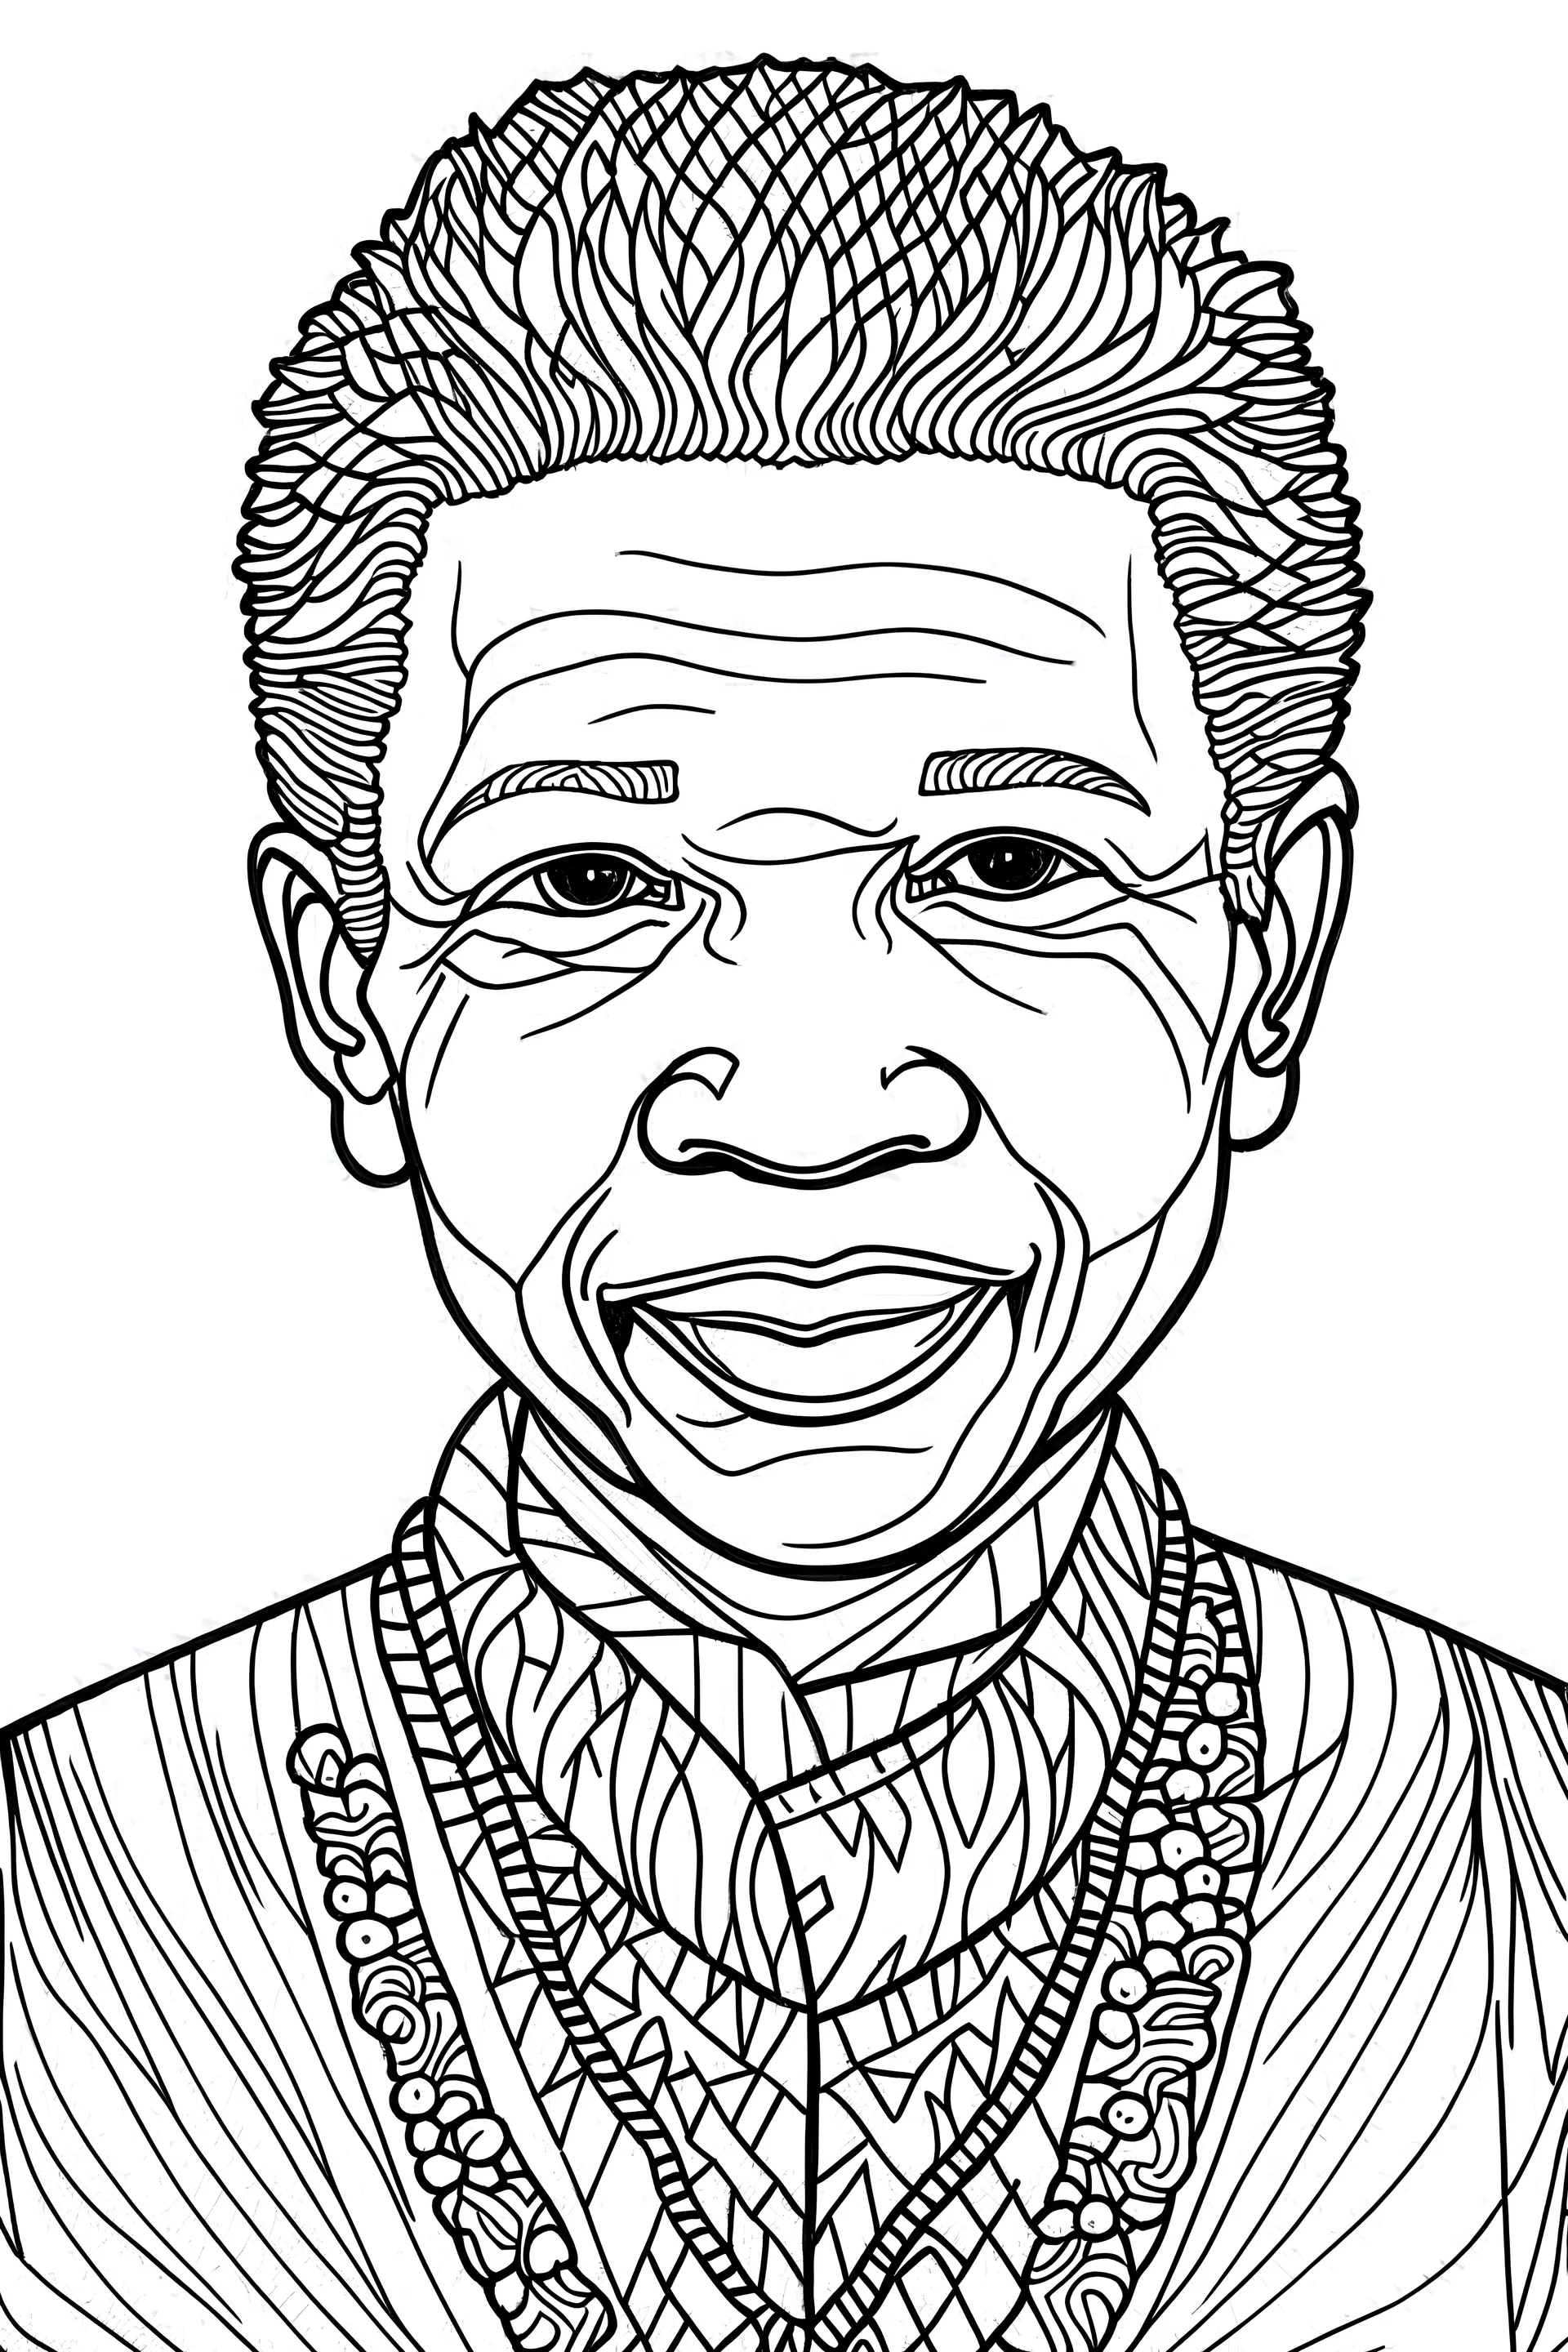 Nelson Mandela Canvas Print by Cristian Mielu | iCanvas